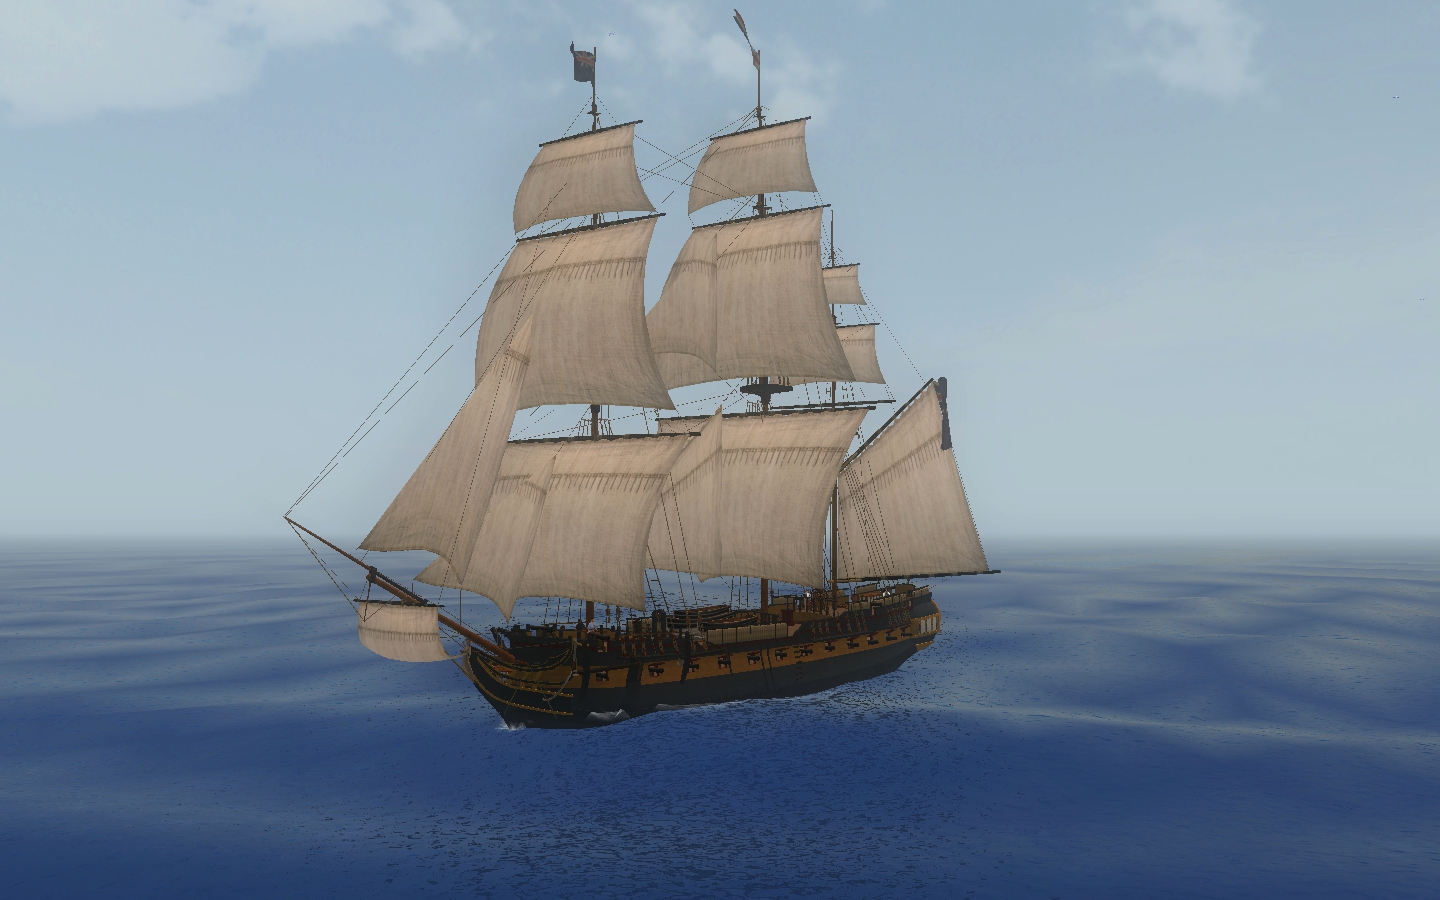 pirates caribbean hunt improved ship 3d model mod